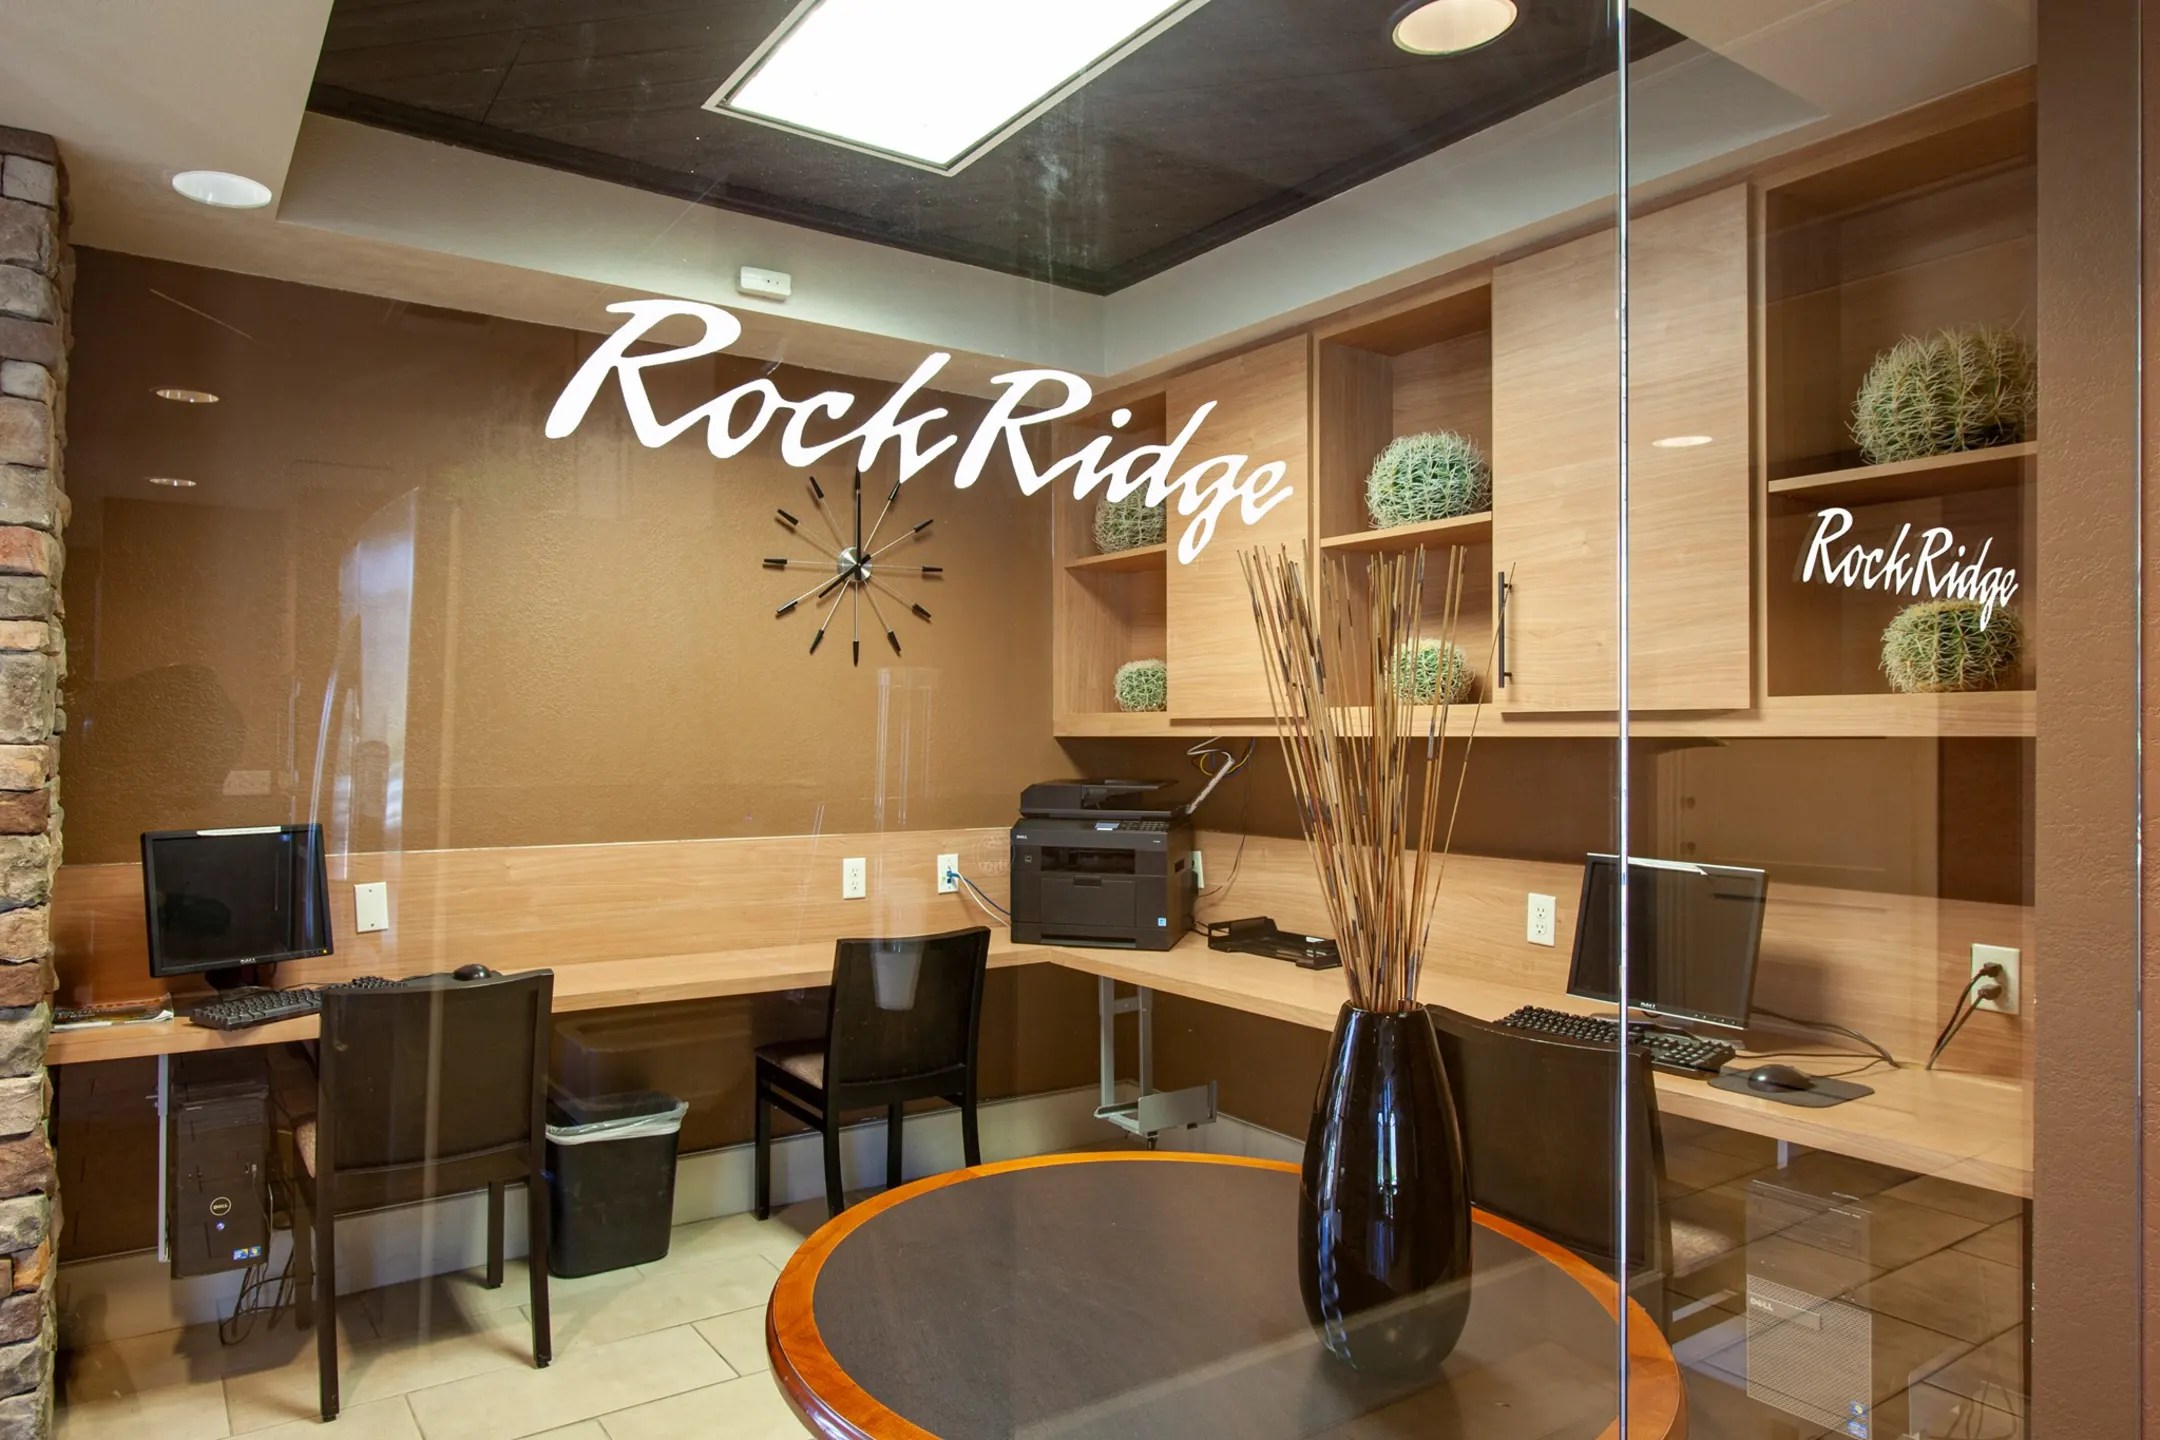 Rock Ridge - Tucson, AZ